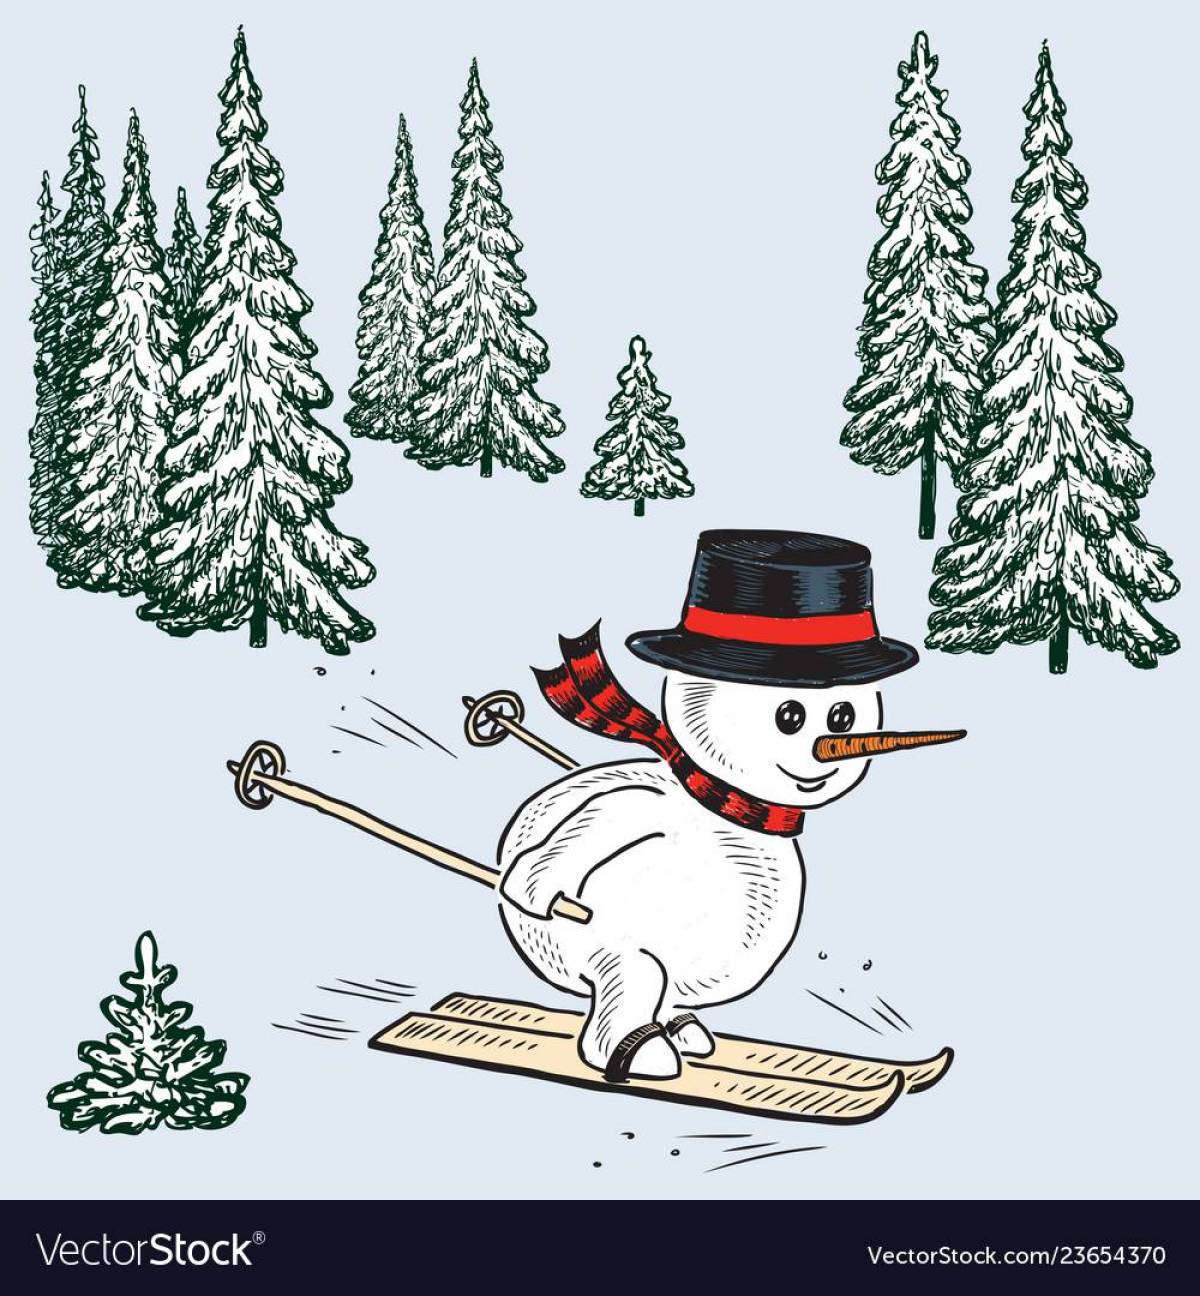 Снеговик на лыжах #8